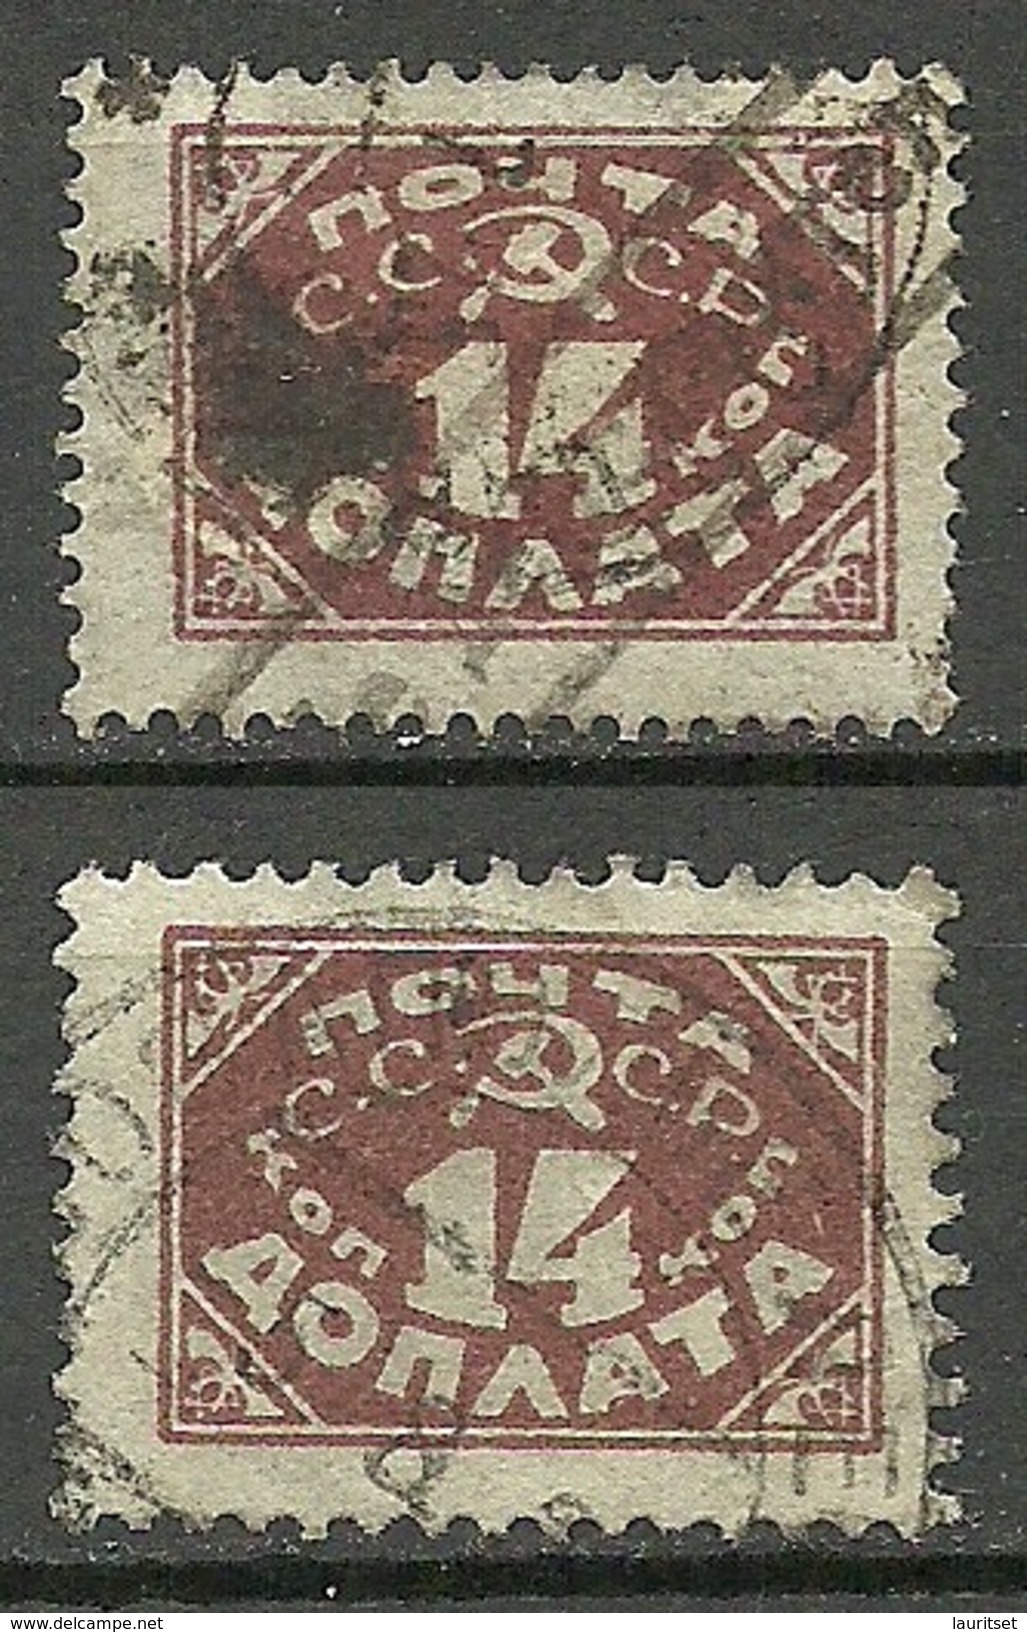 RUSSLAND RUSSIA 1925 Porto Postage Due Michel 17 I A + 17 I B O - Postage Due